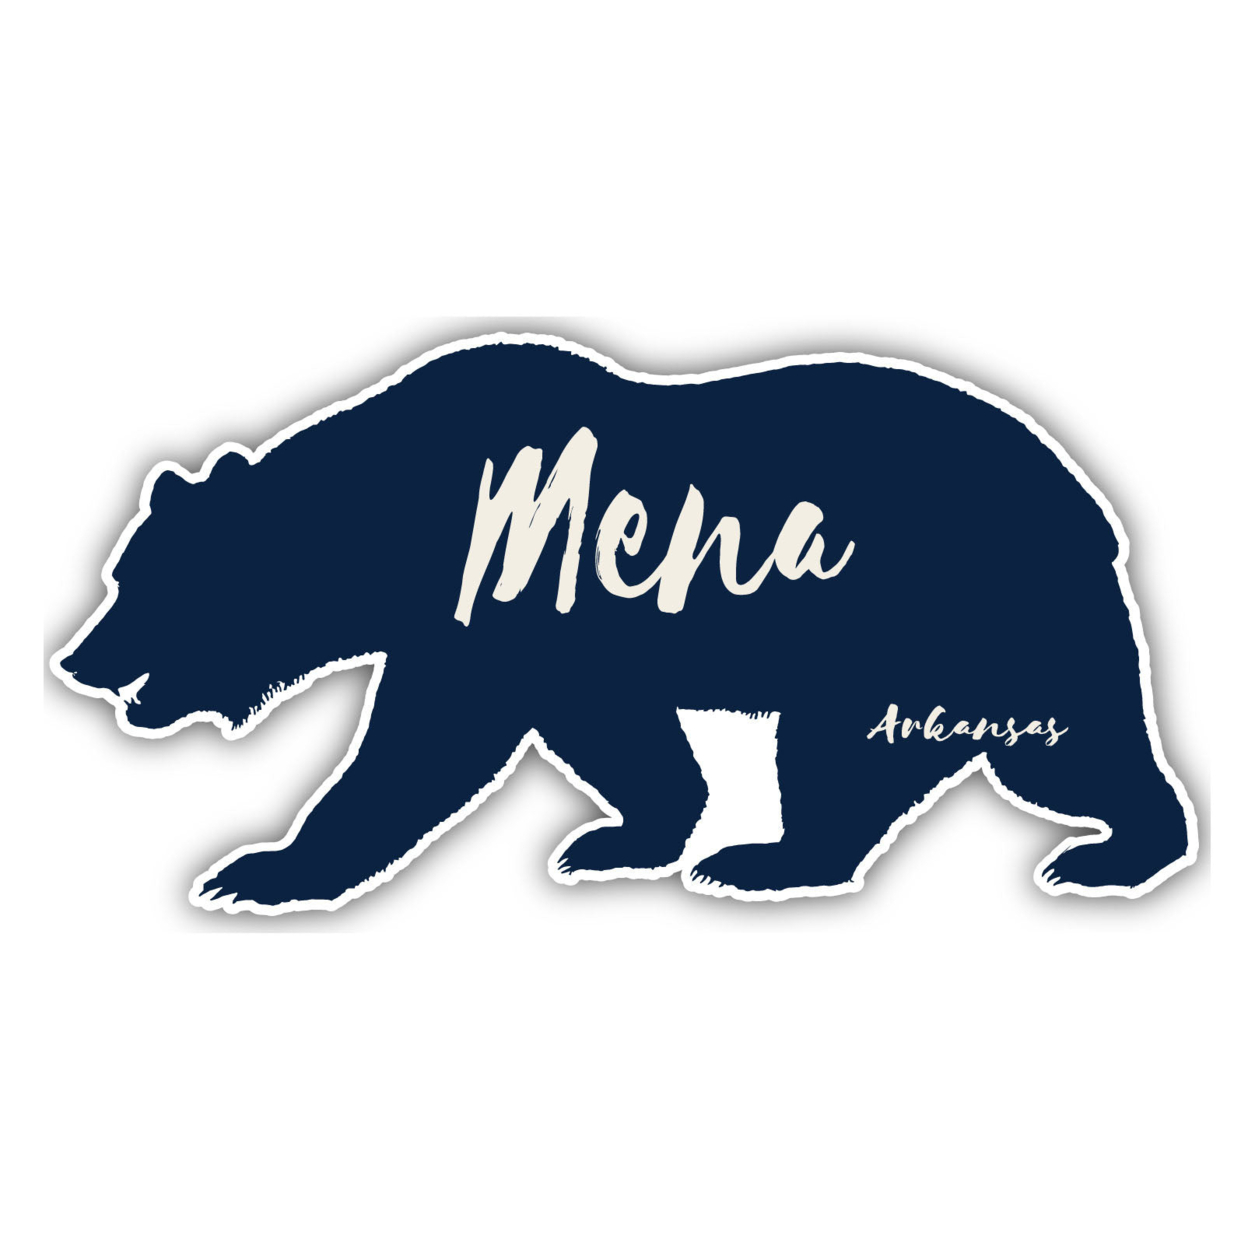 Mena Arkansas Souvenir Decorative Stickers (Choose Theme And Size) - 2-Inch, Bear